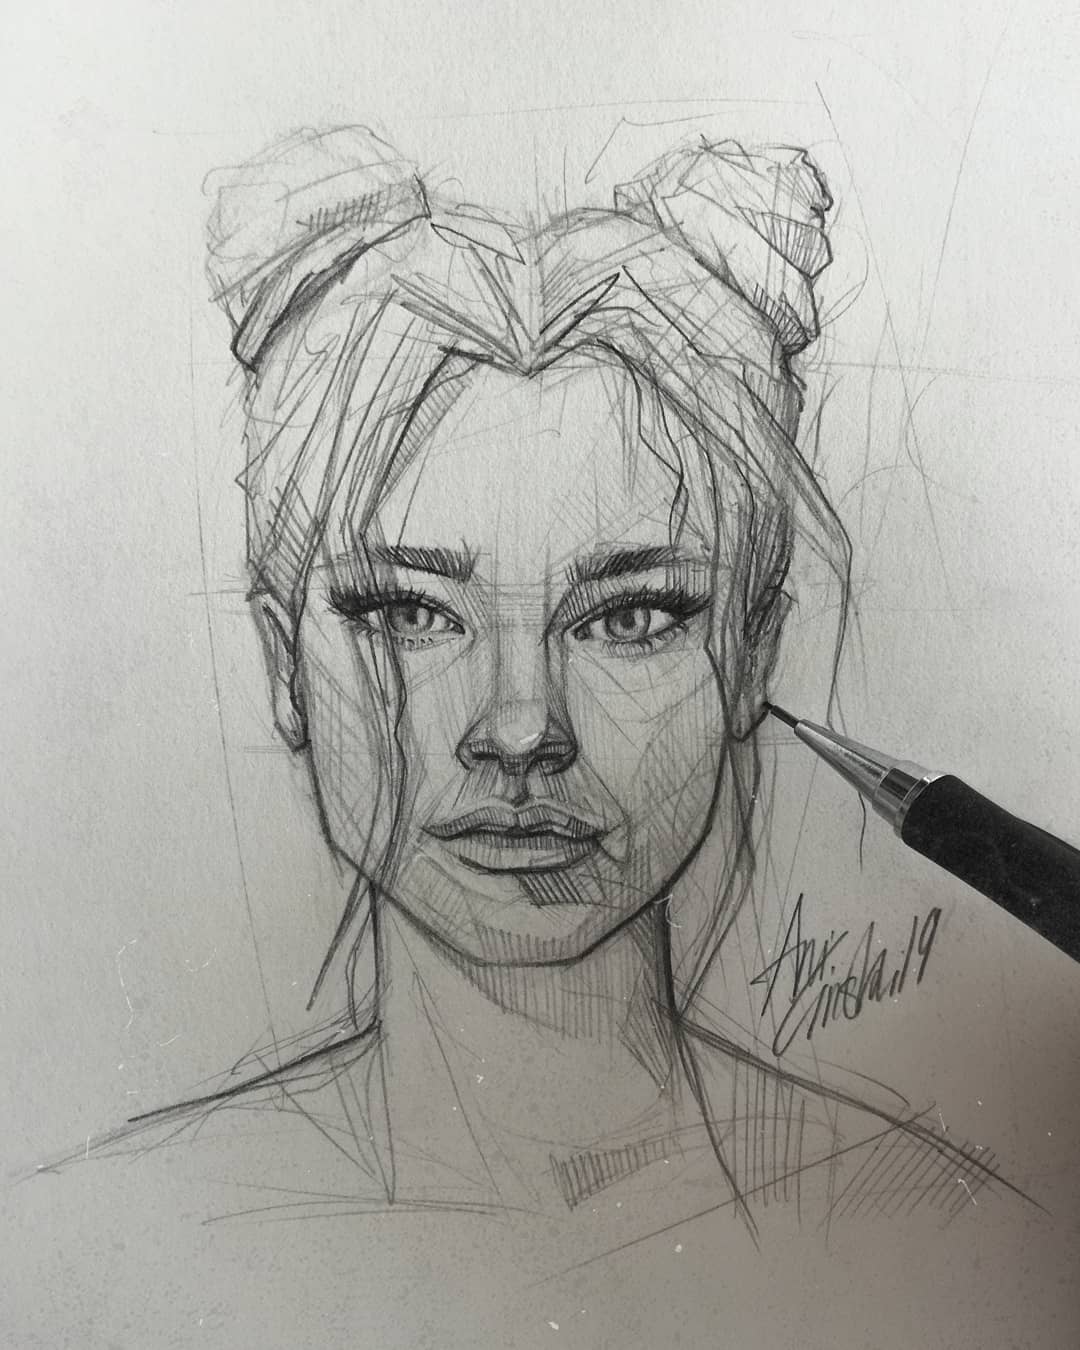 Pencil sketch artist Ani Cinski